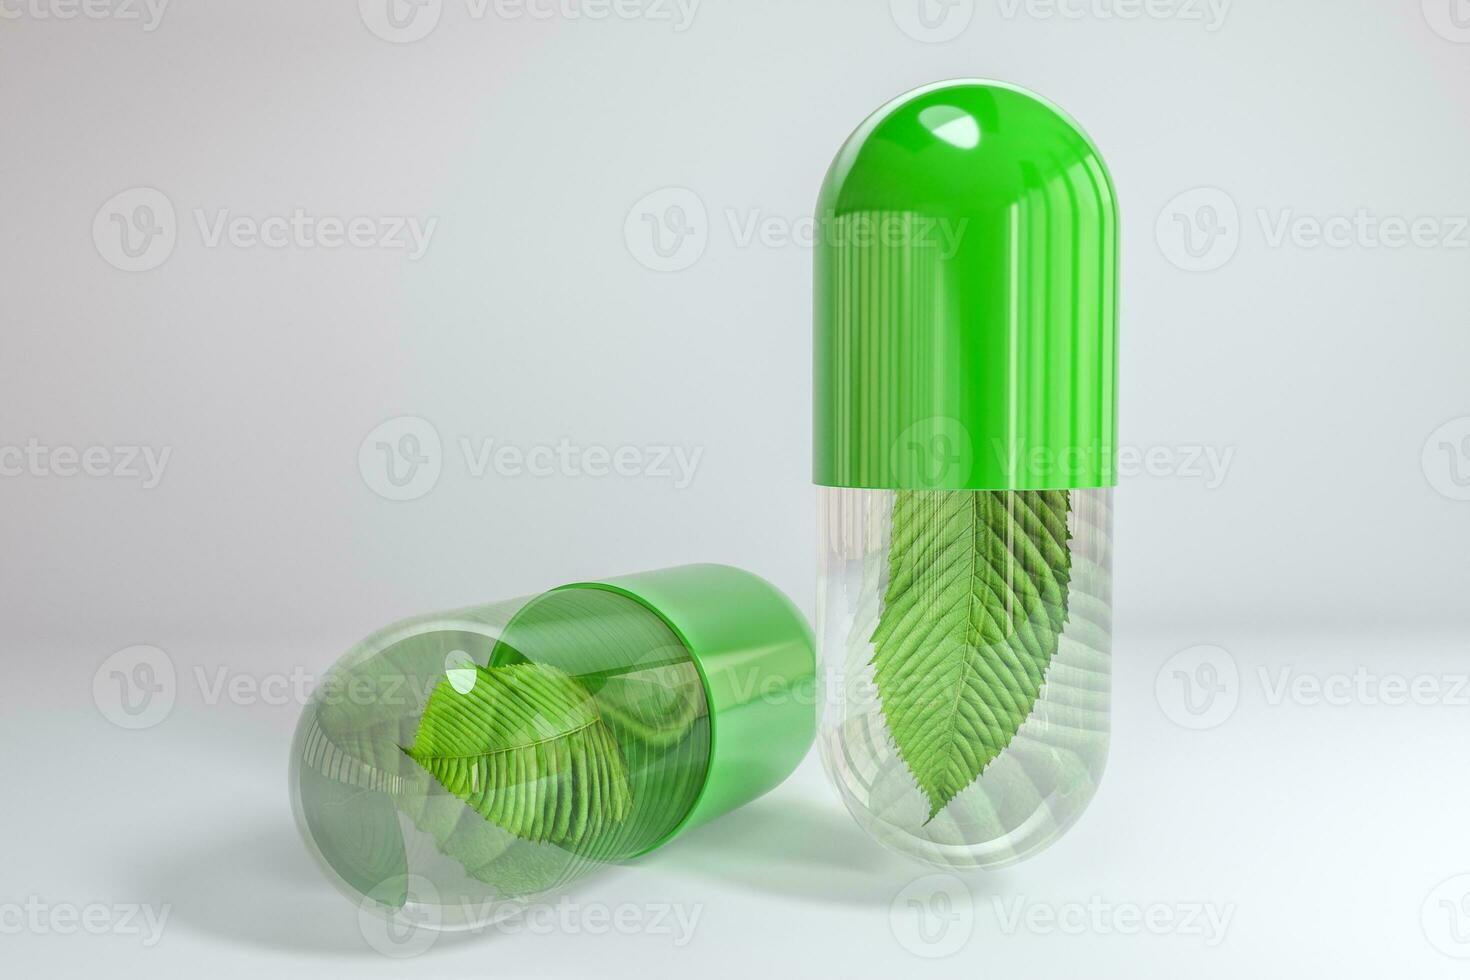 3d weergave, groen capsule met blad in het foto